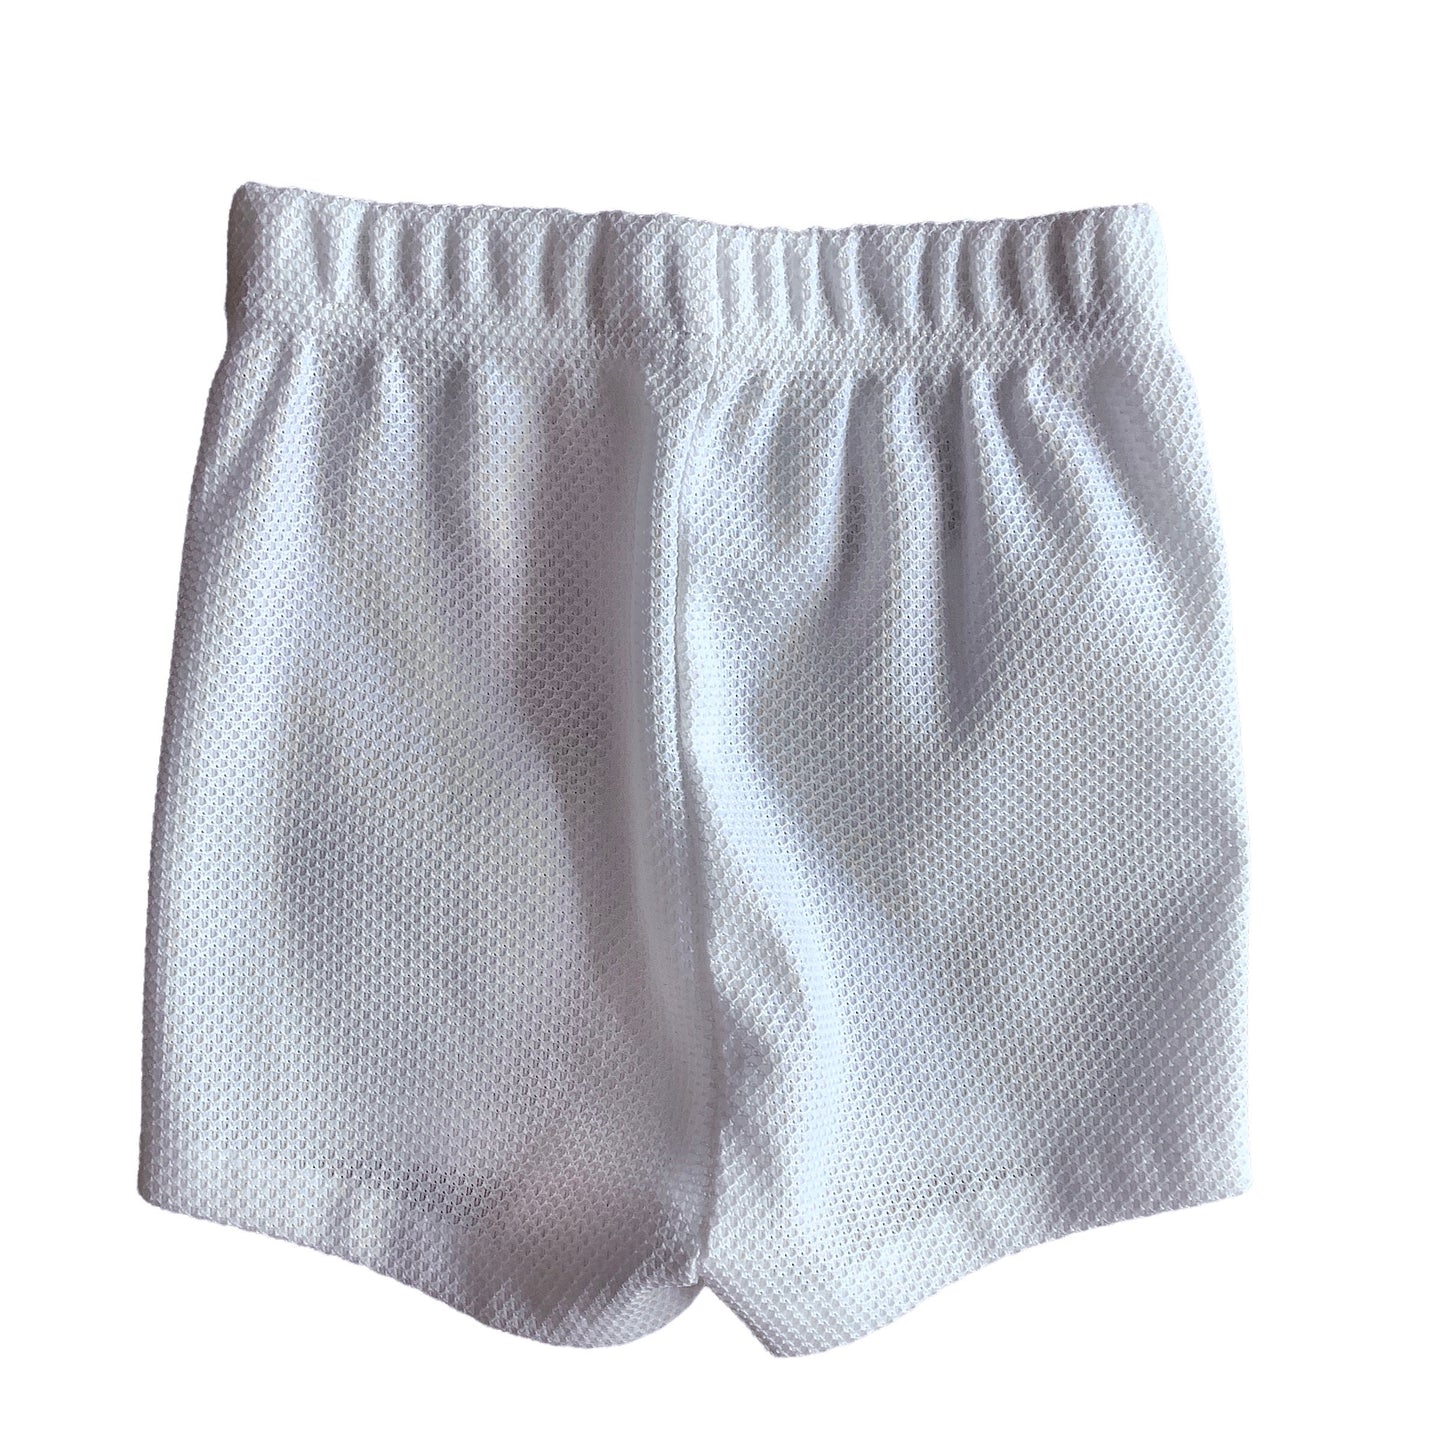 Vintage 1970's White Shorts 0-3M